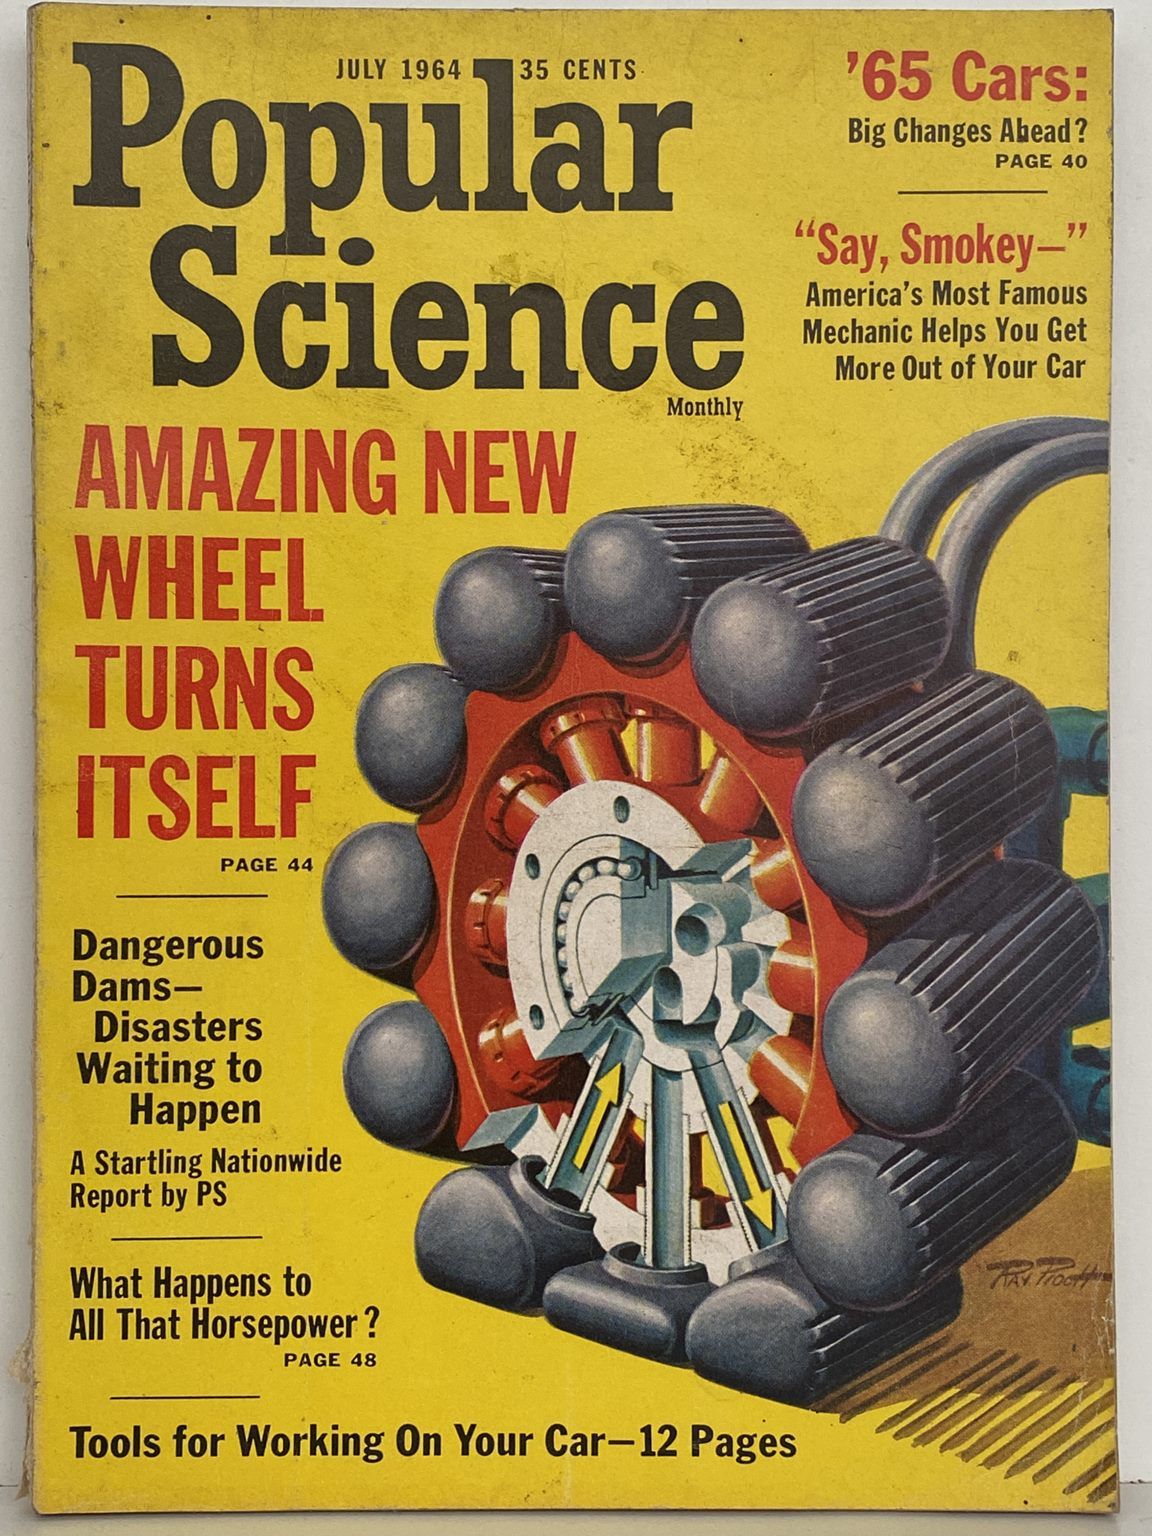 VINTAGE MAGAZINE: Popular Science - July 1964